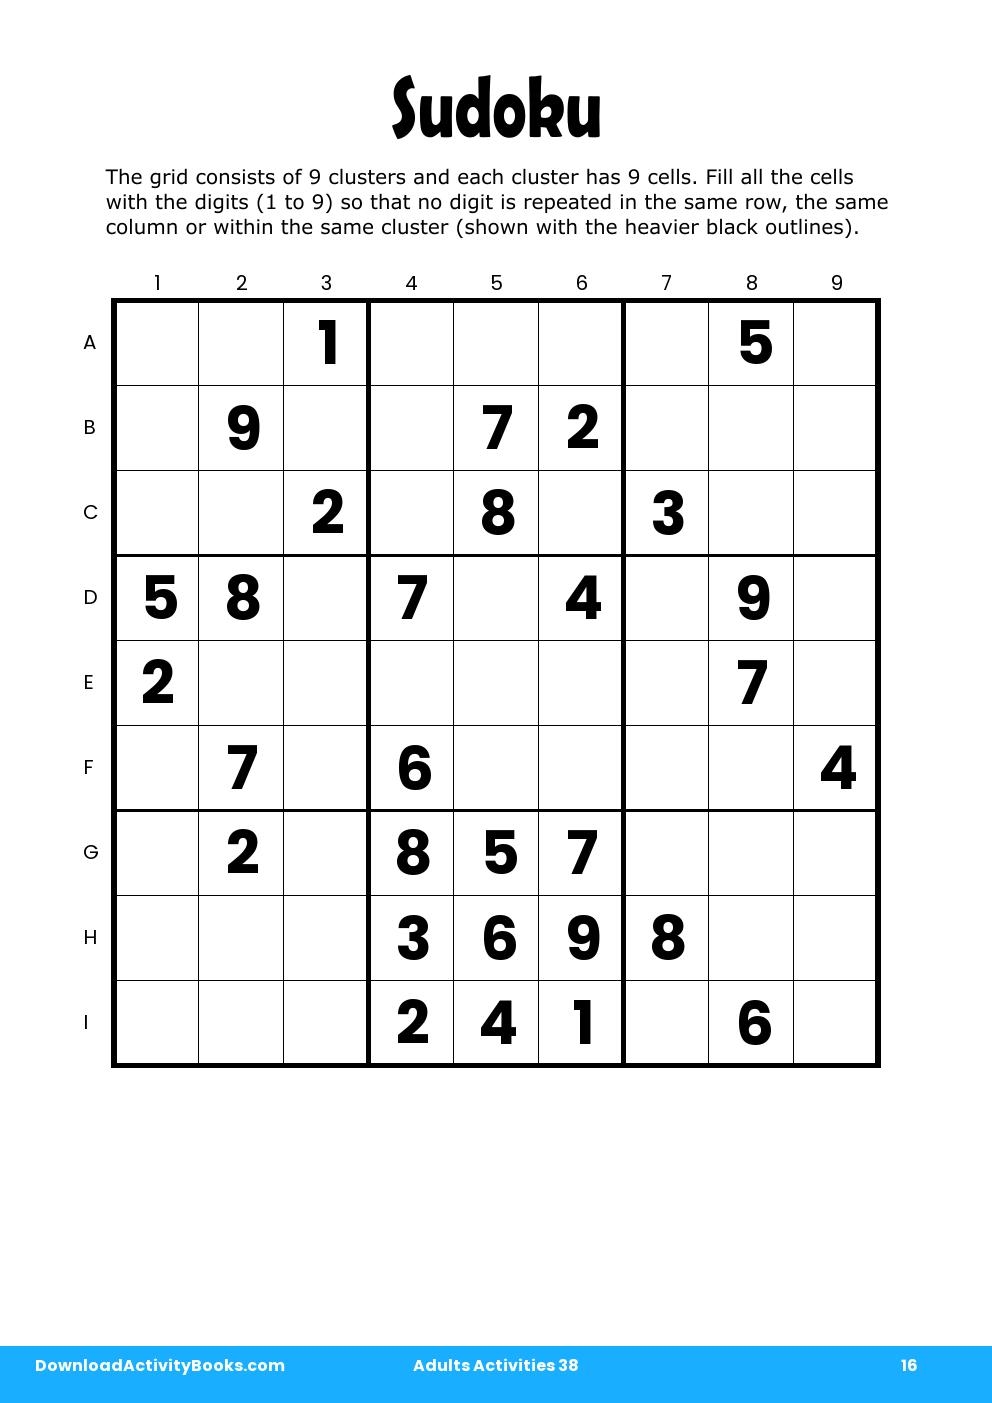 Sudoku in Adults Activities 38